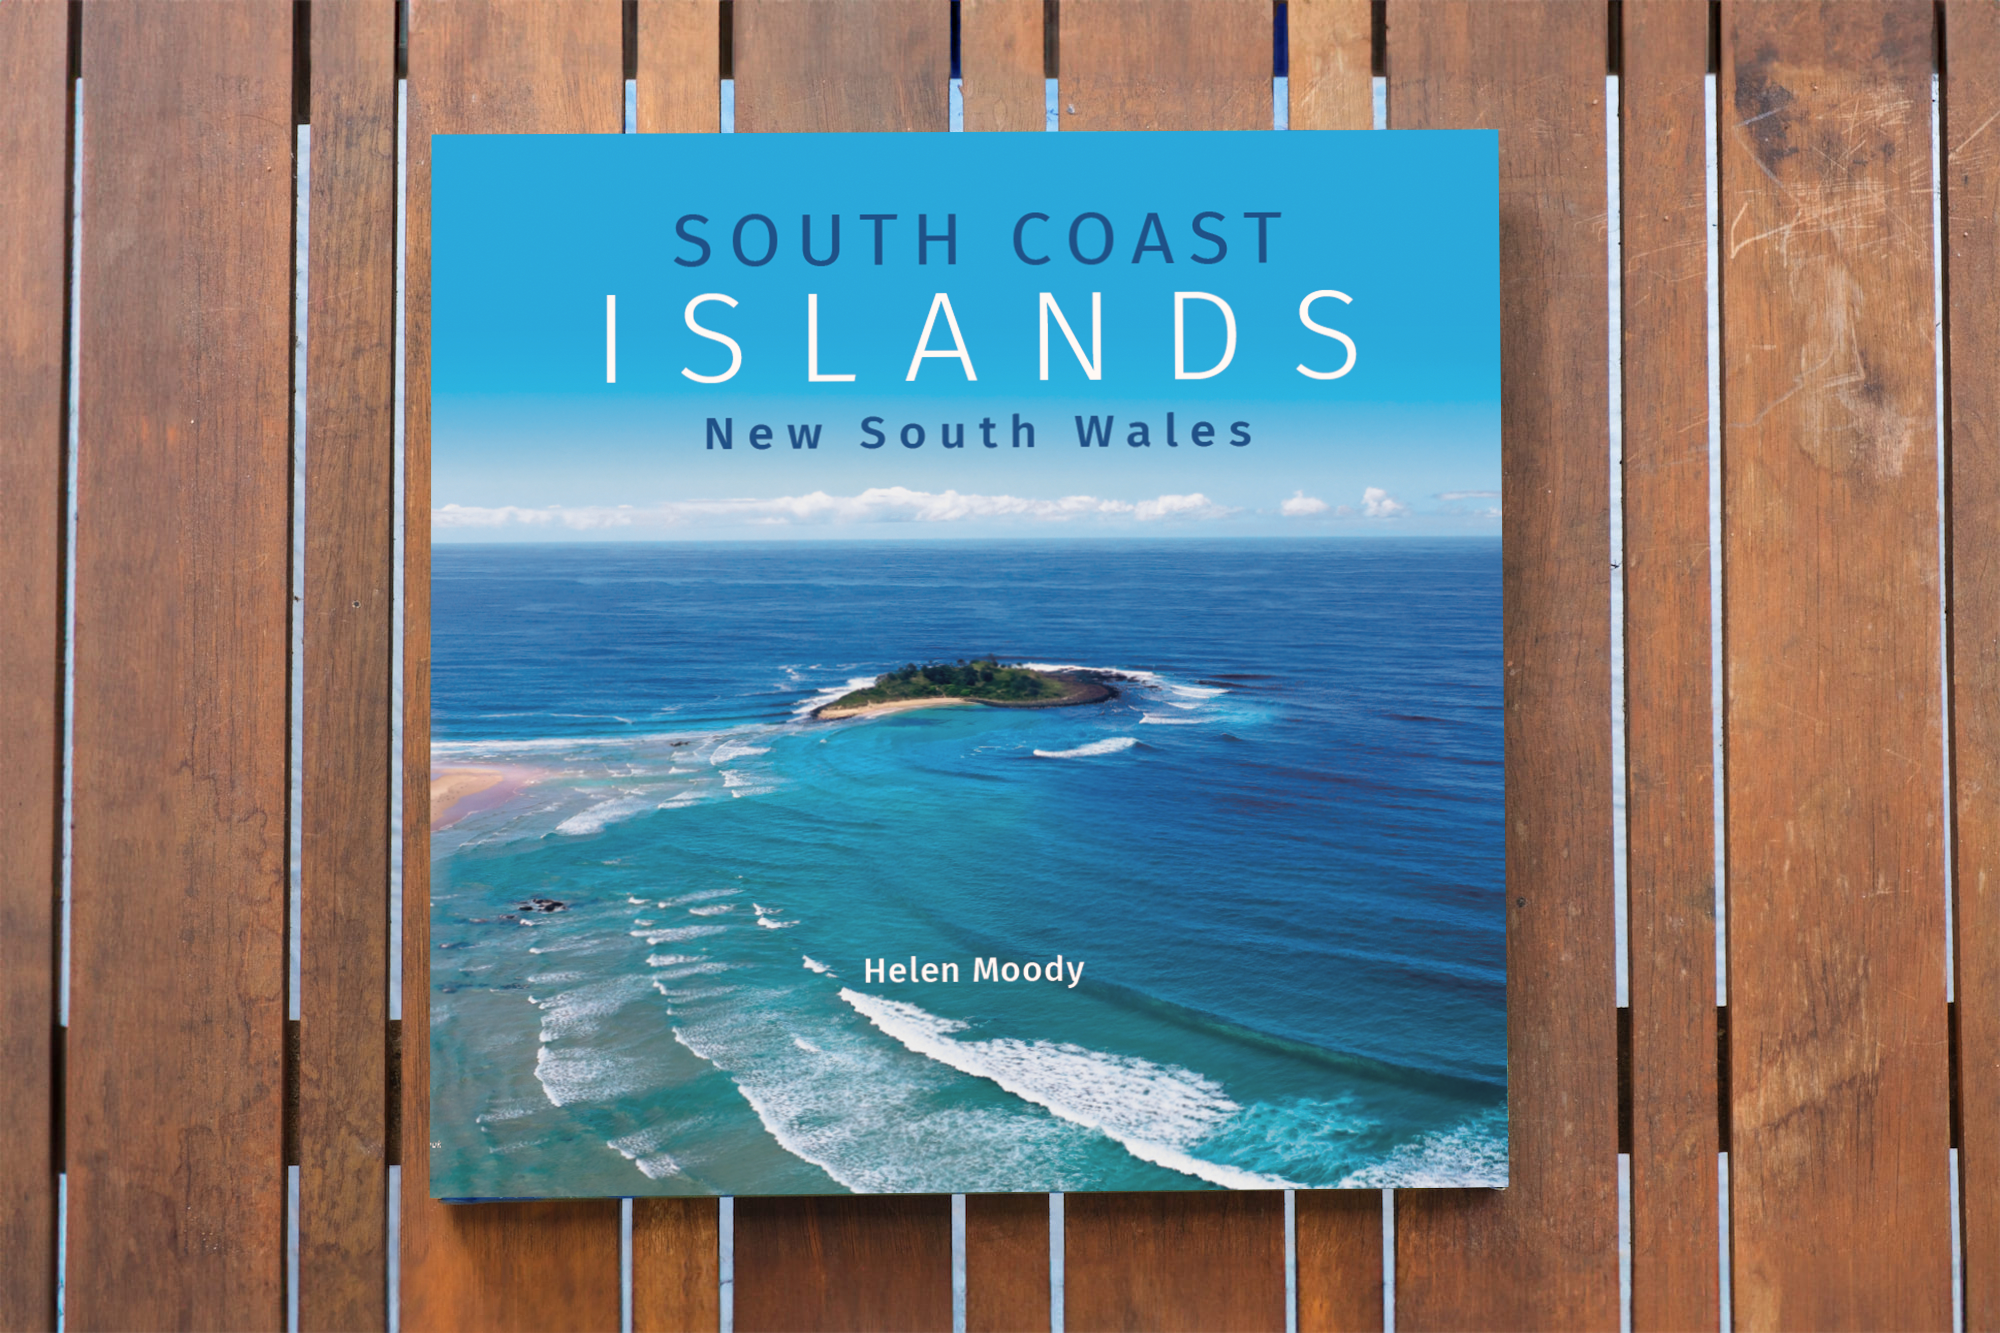 South Coast Islands - New South Wales